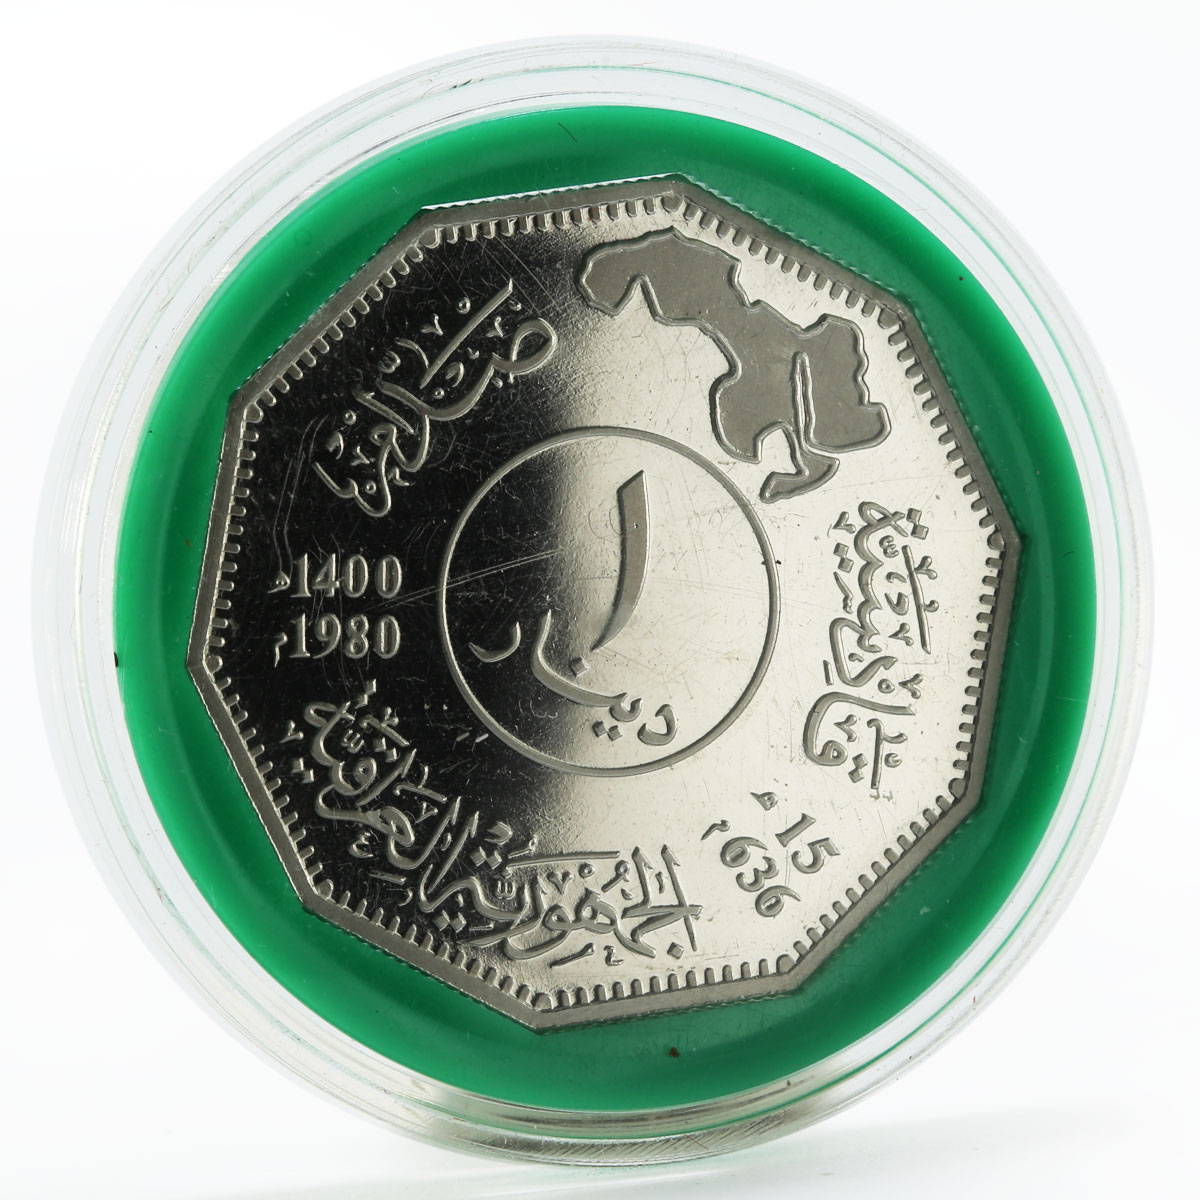 Iraq 1 dinar Battle of ai-Qadisiyyah proof nickel coin 1980